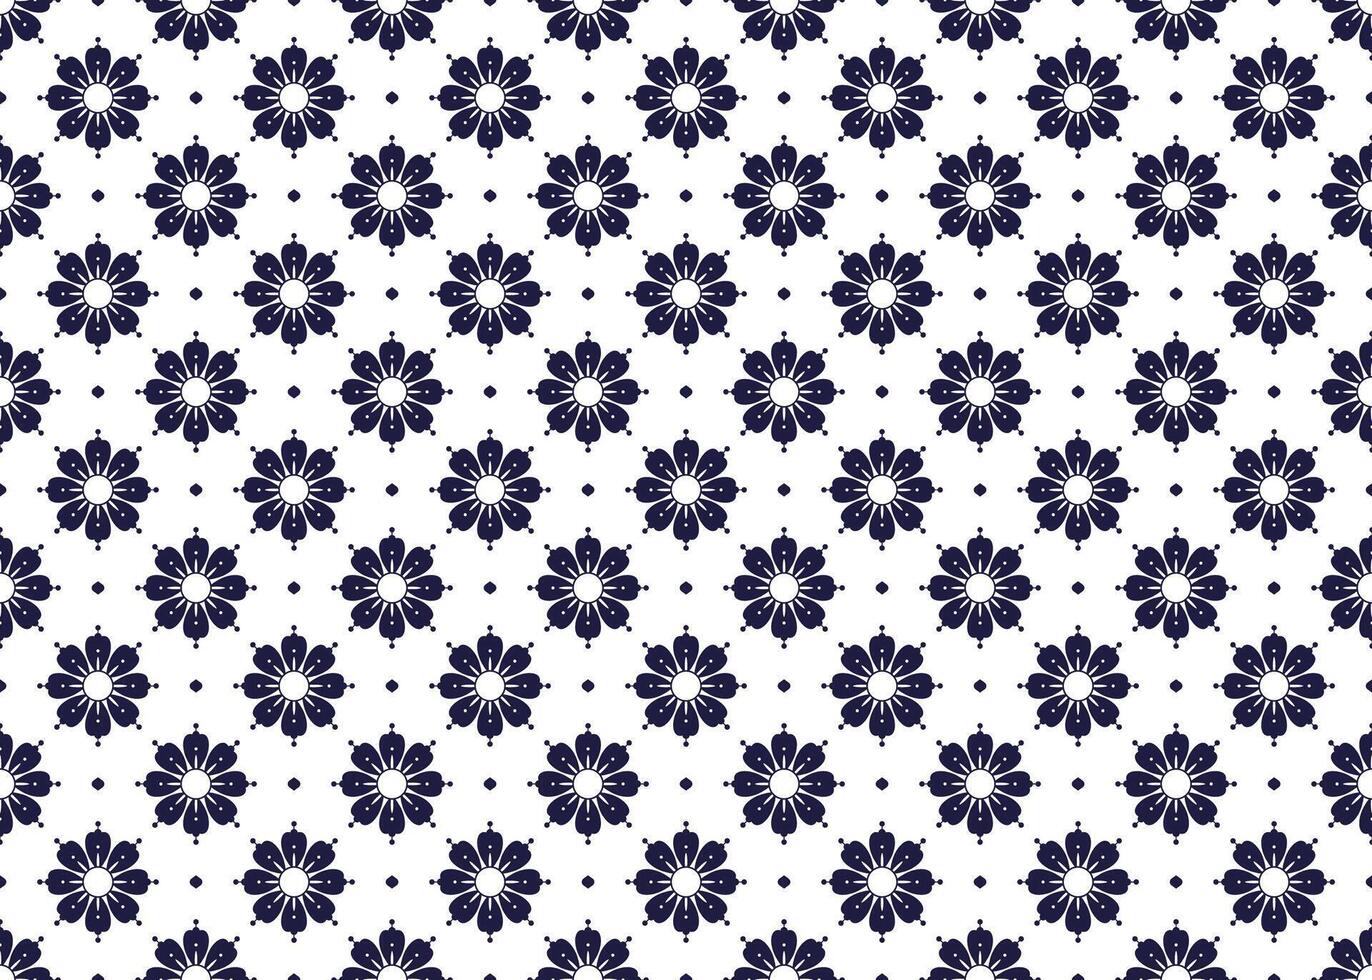 símbolo geométrico blanco flor en azul antecedentes sin costura modelo para paño alfombra fondo de pantalla envase etc. vector